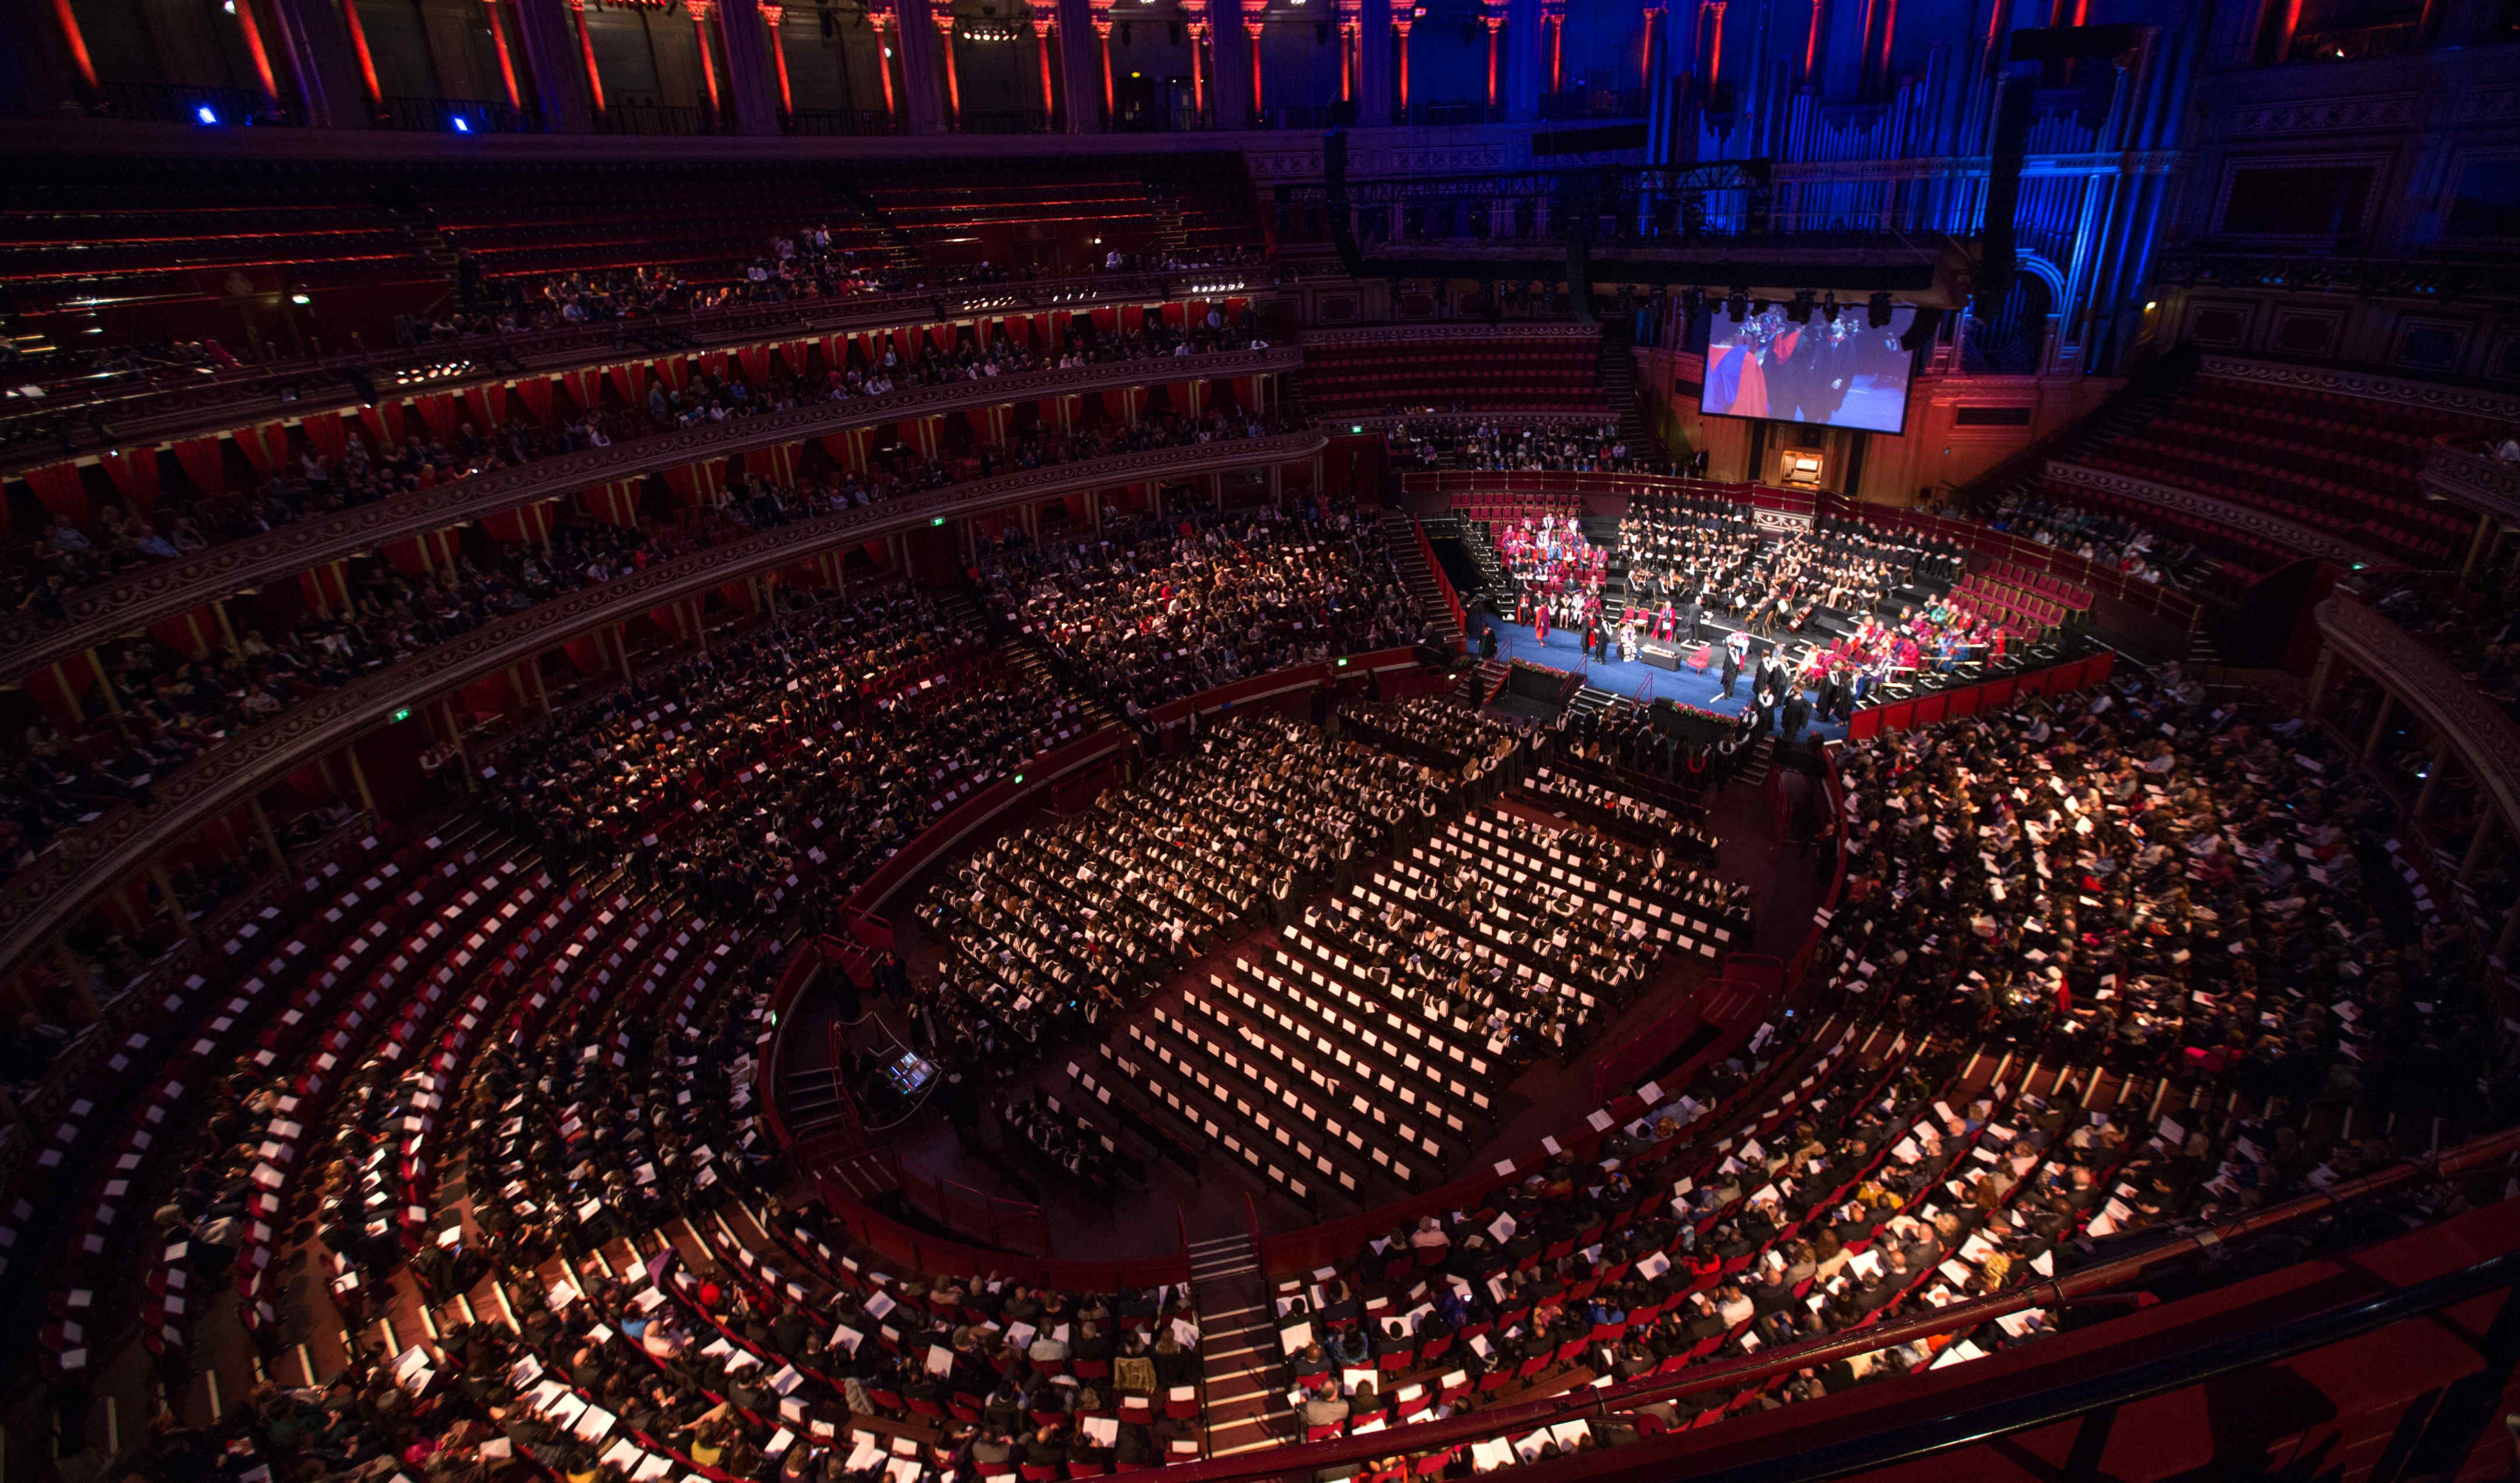 Royal Albert Hall during Graduation